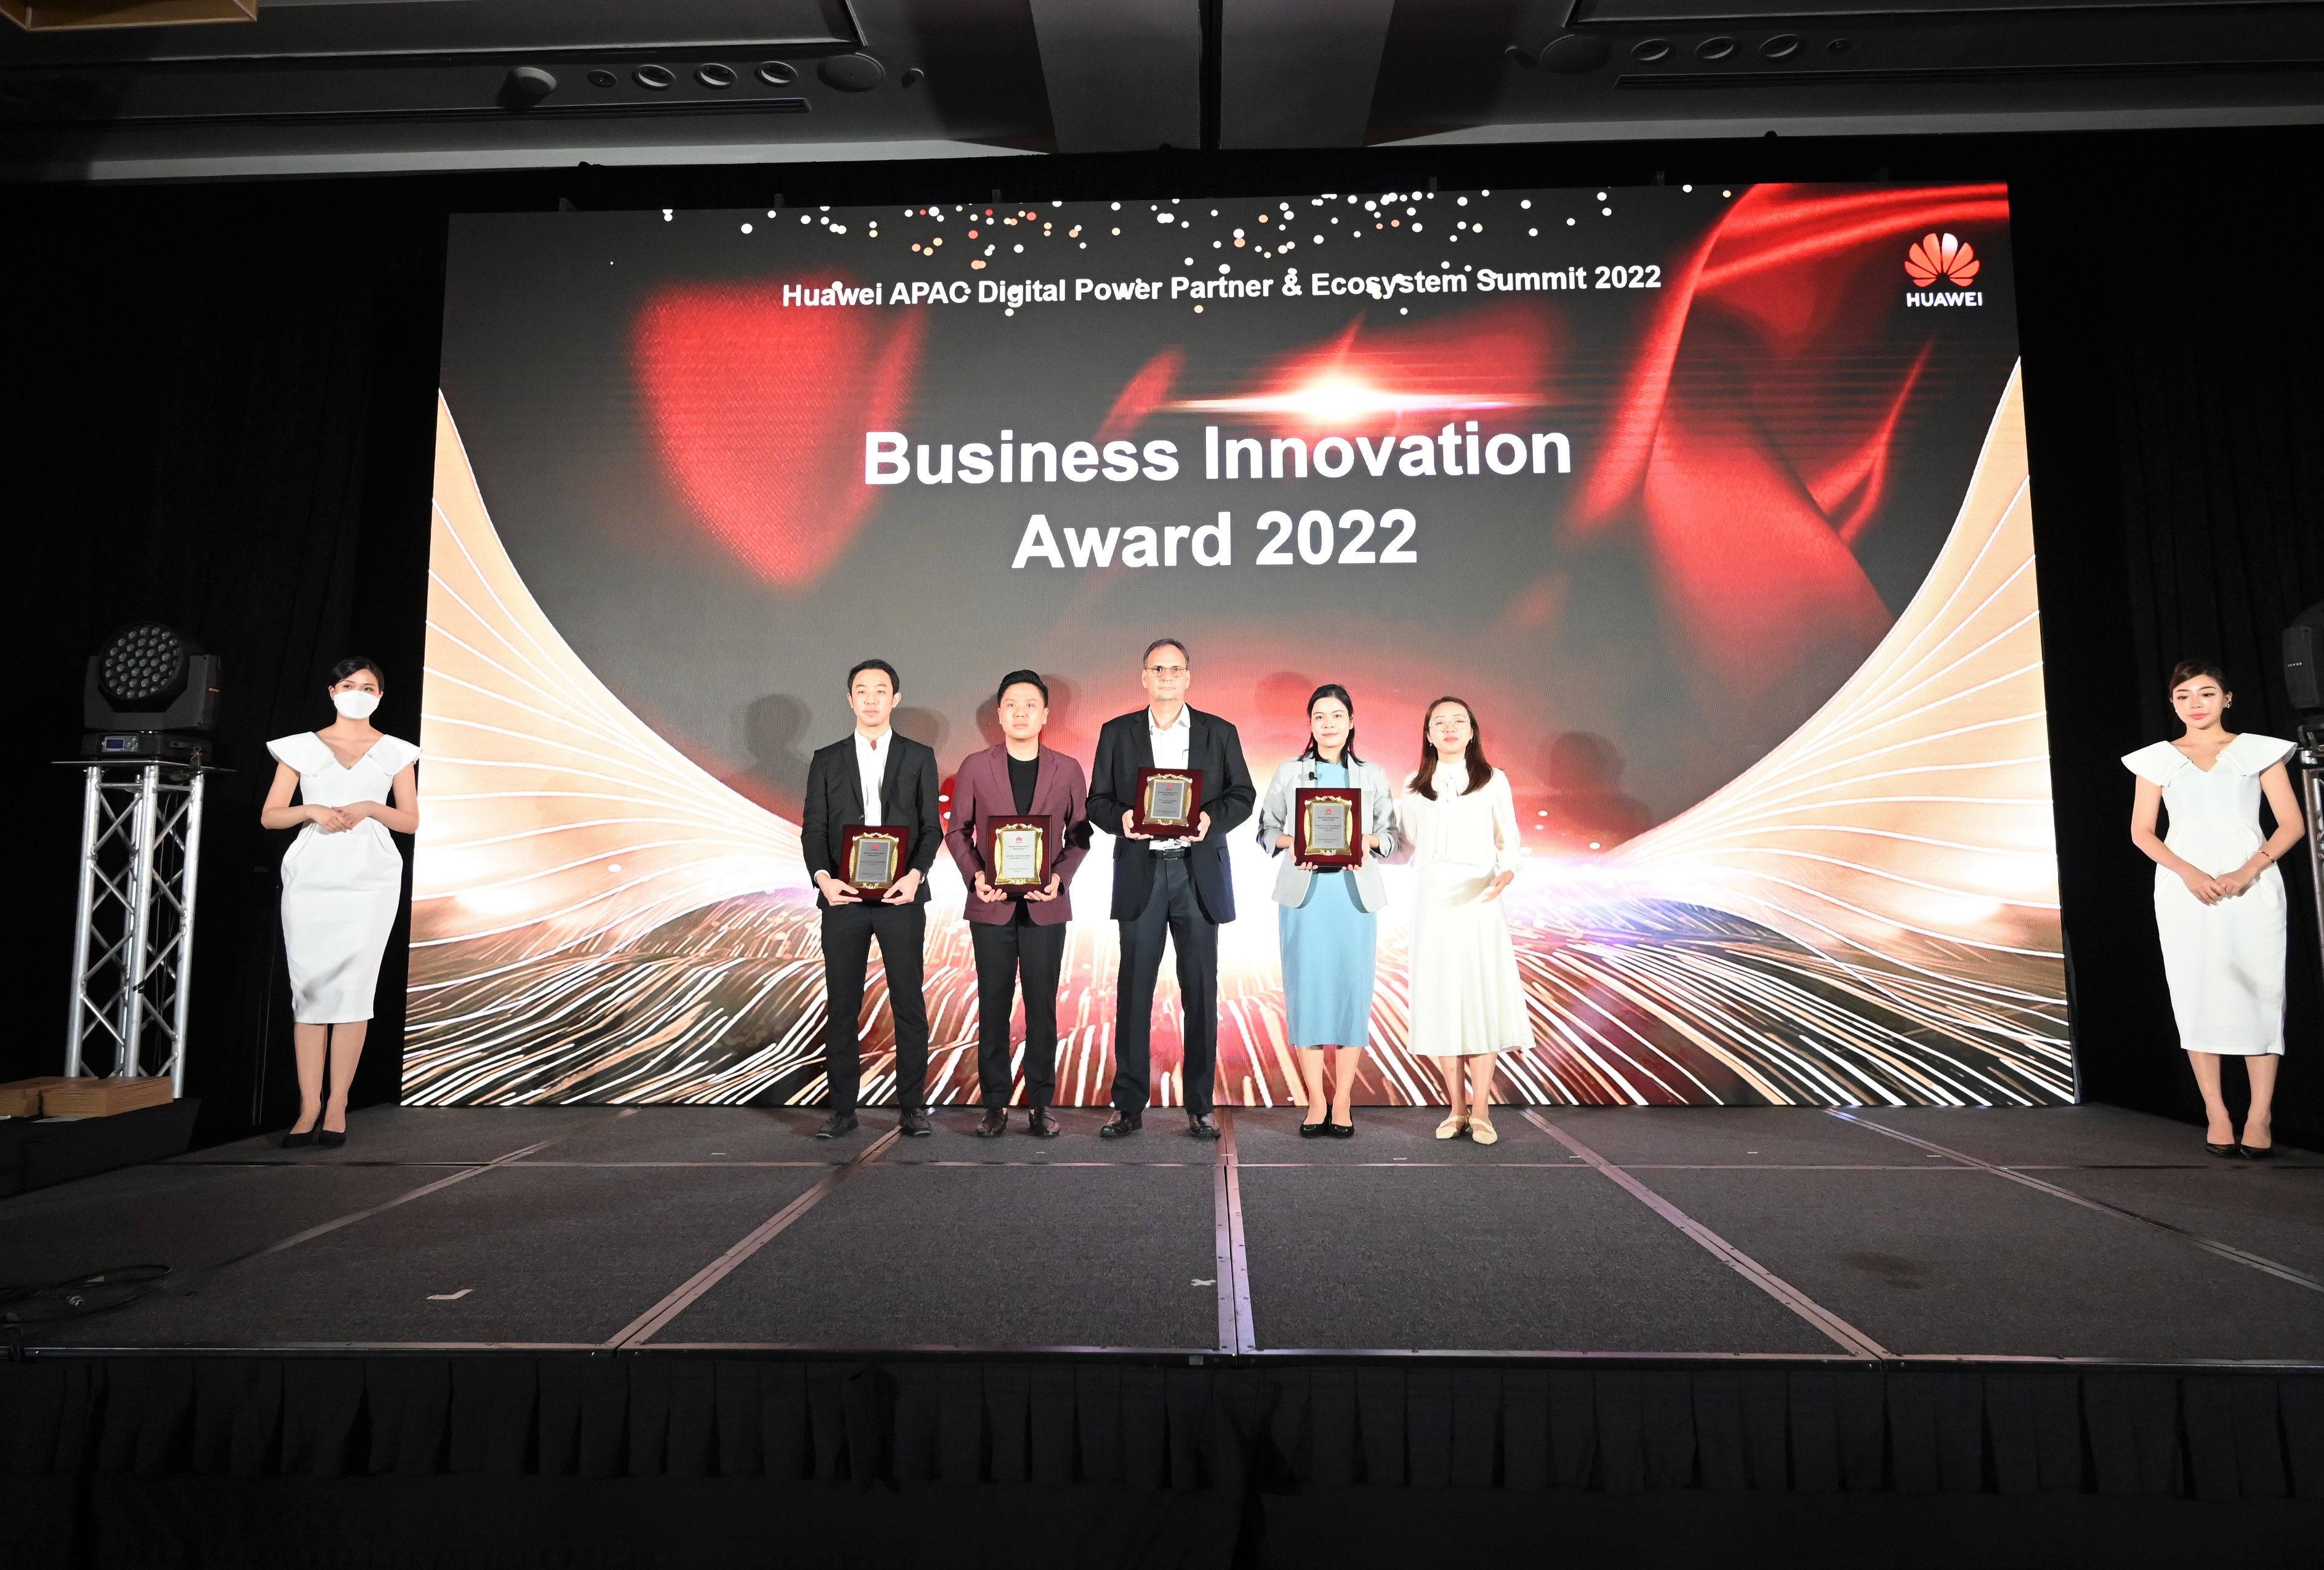 Business Innovation Award 2022